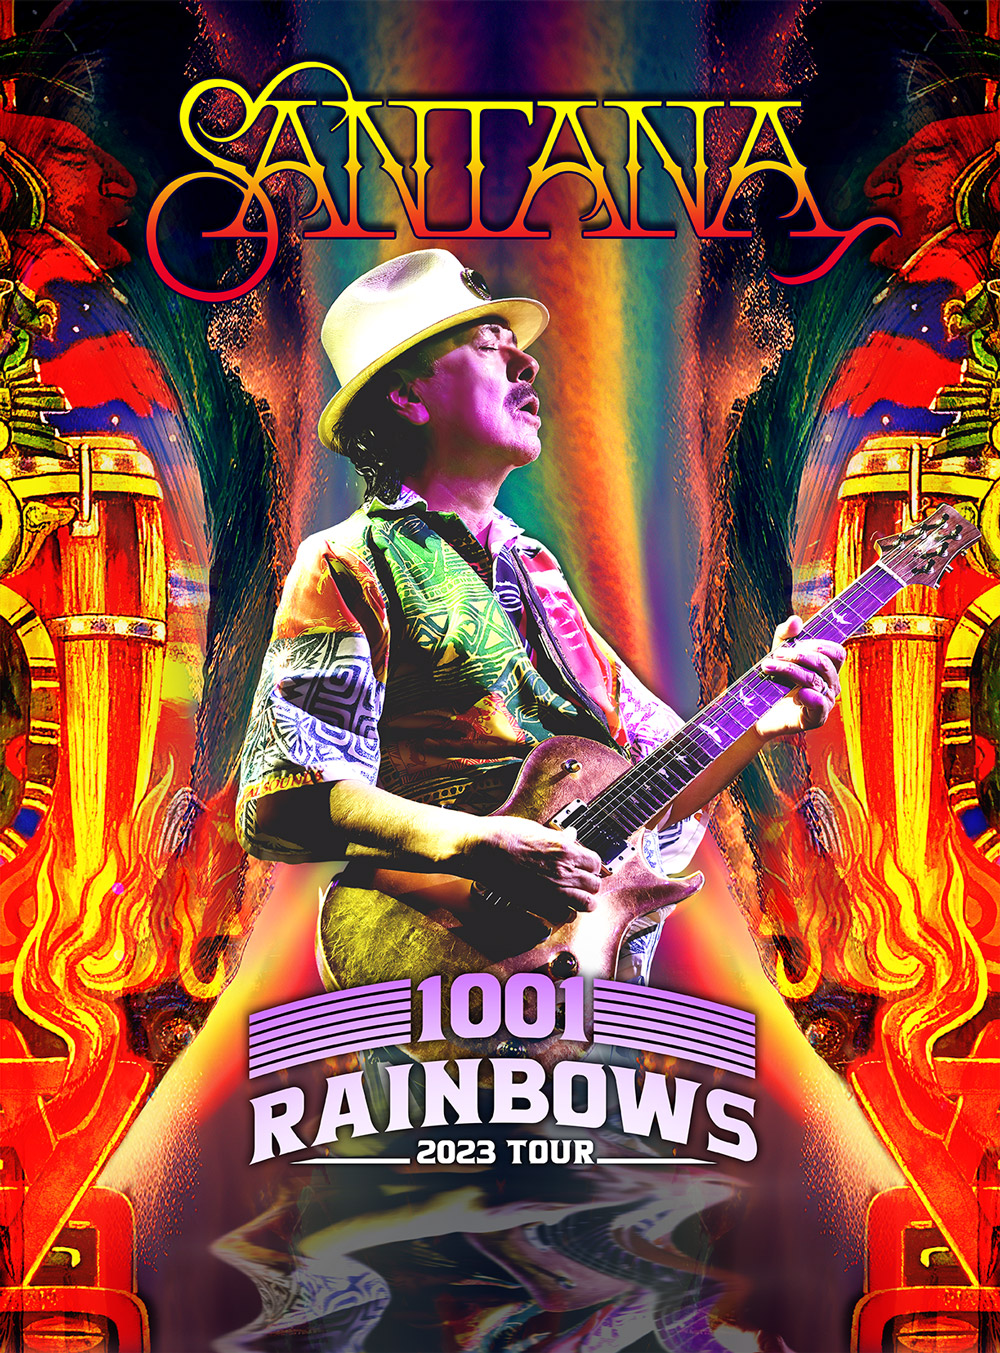 `Santana - 1001 Rainbows Tour` image courtesy of Fallsview Casino Resort